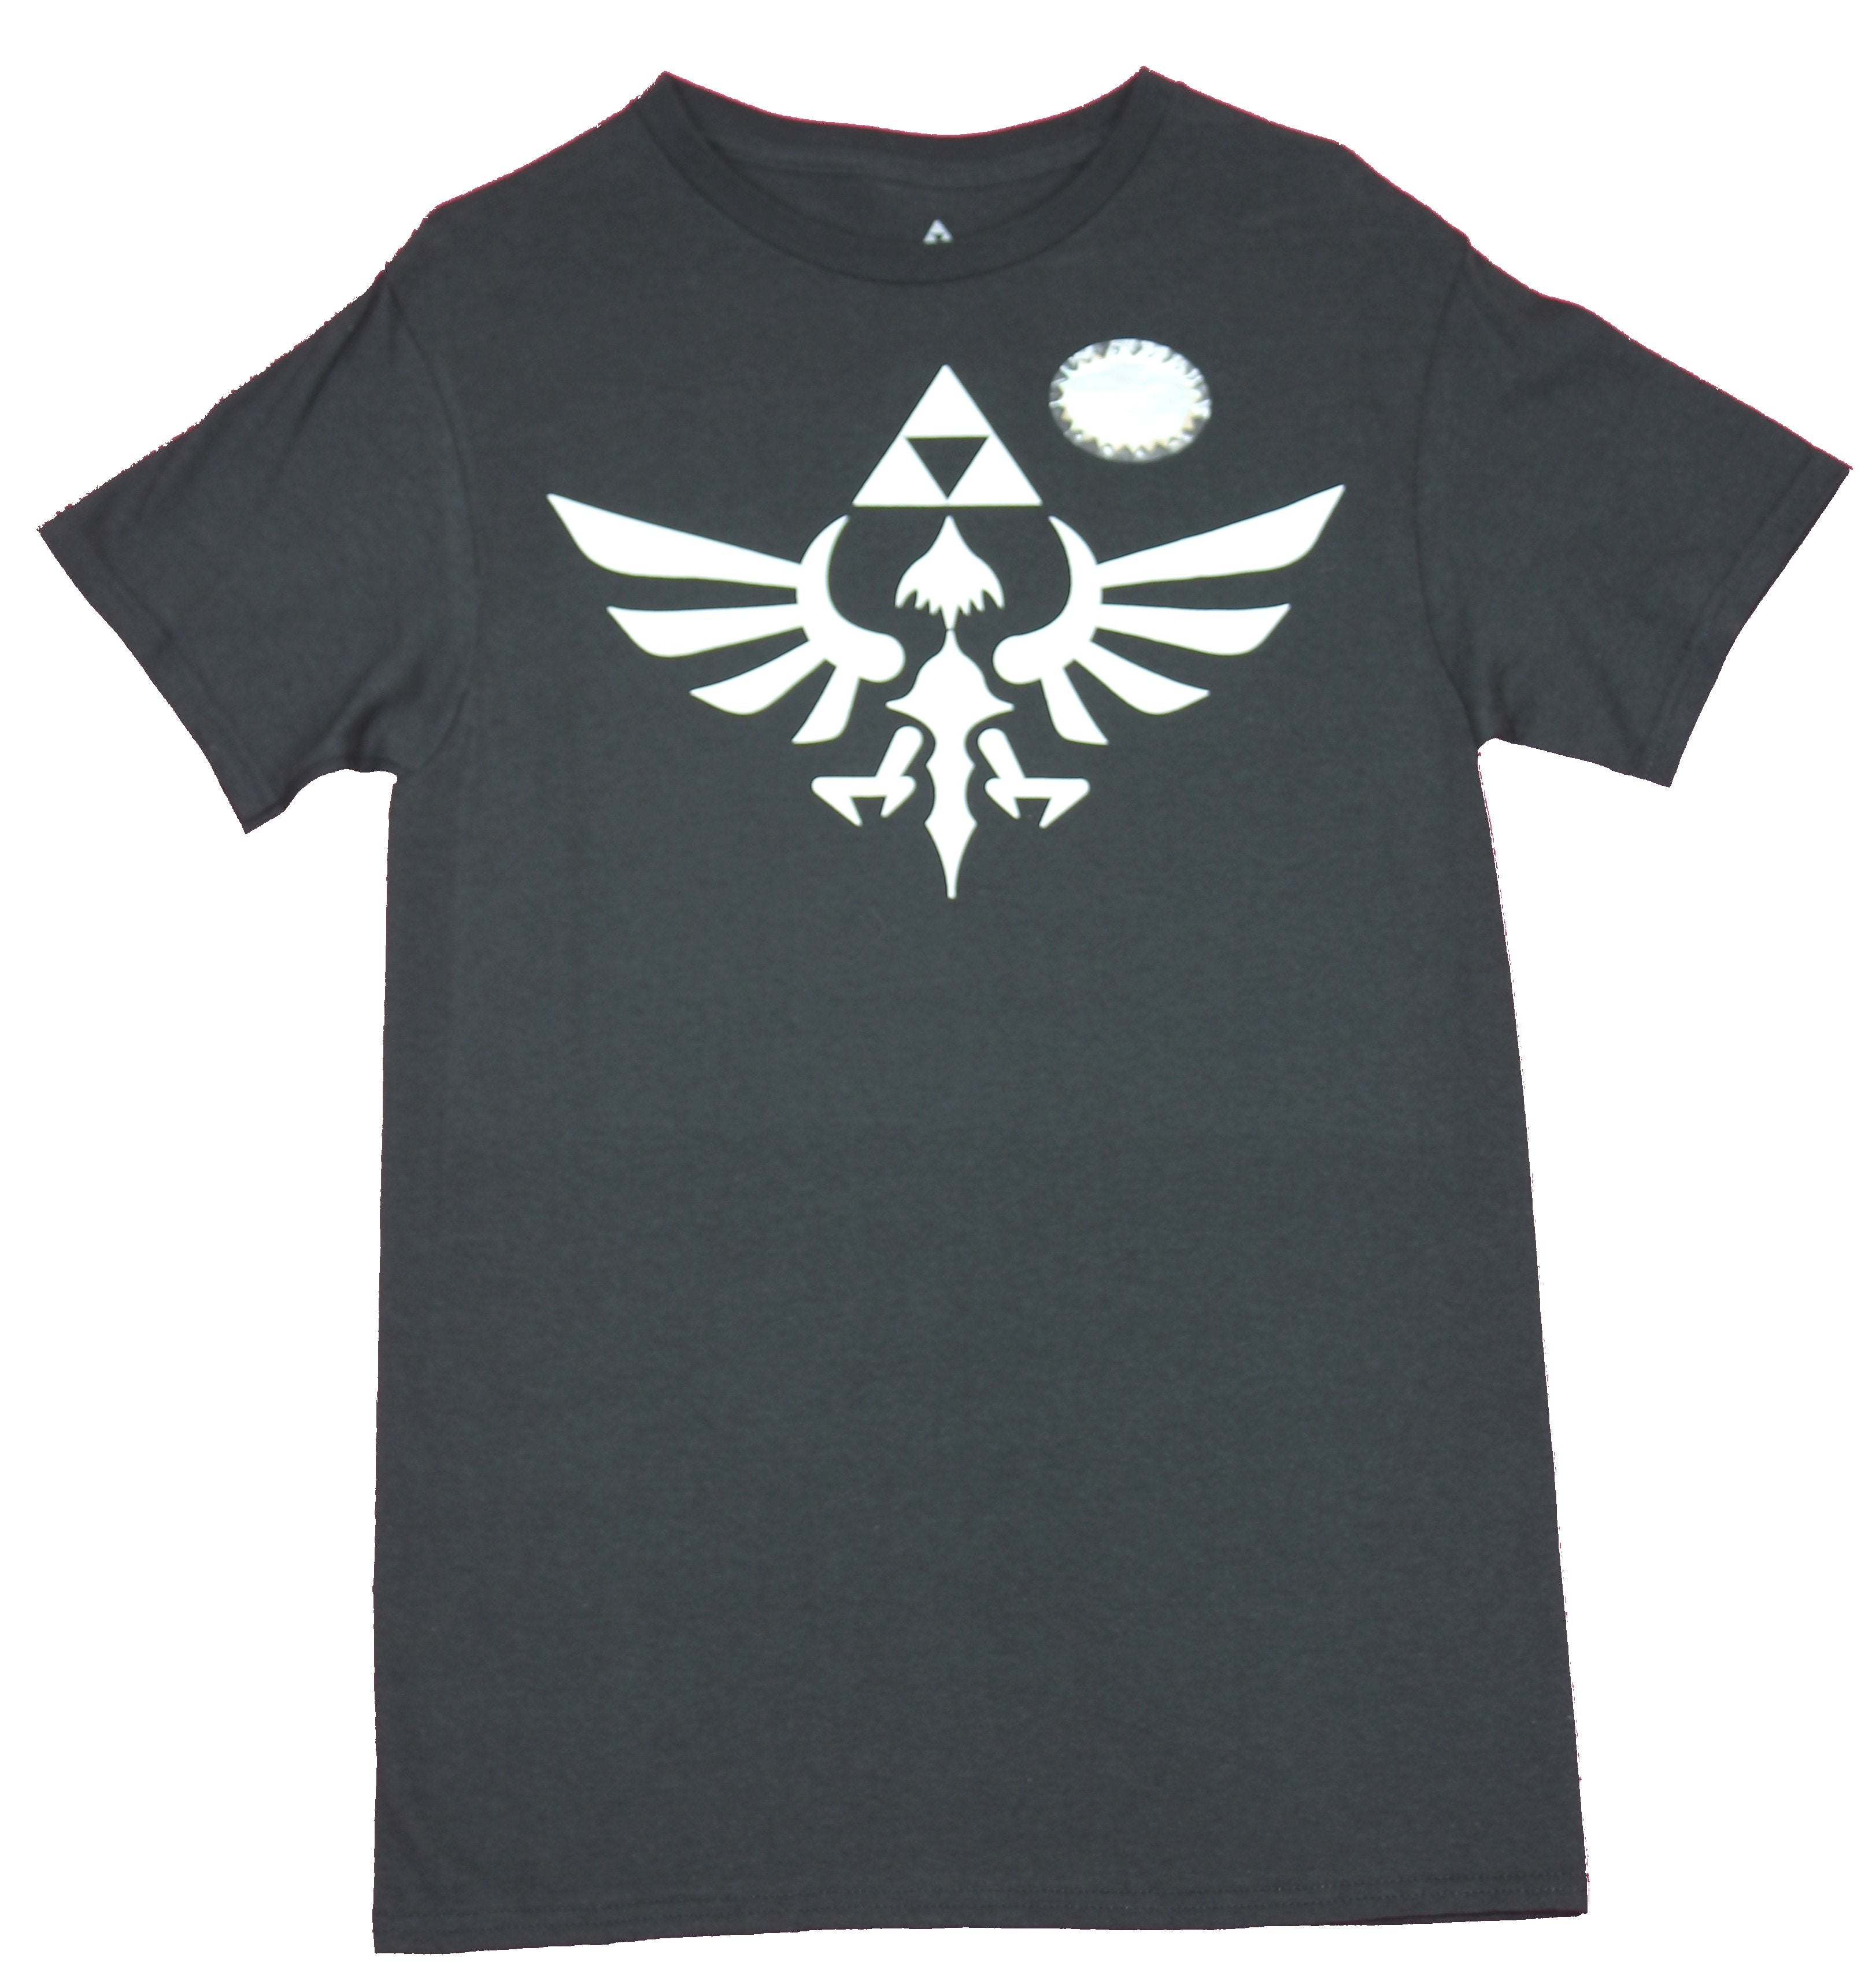 Legend of Zelda Mens T-Shirt - Classic Solid Print White Triforce Image